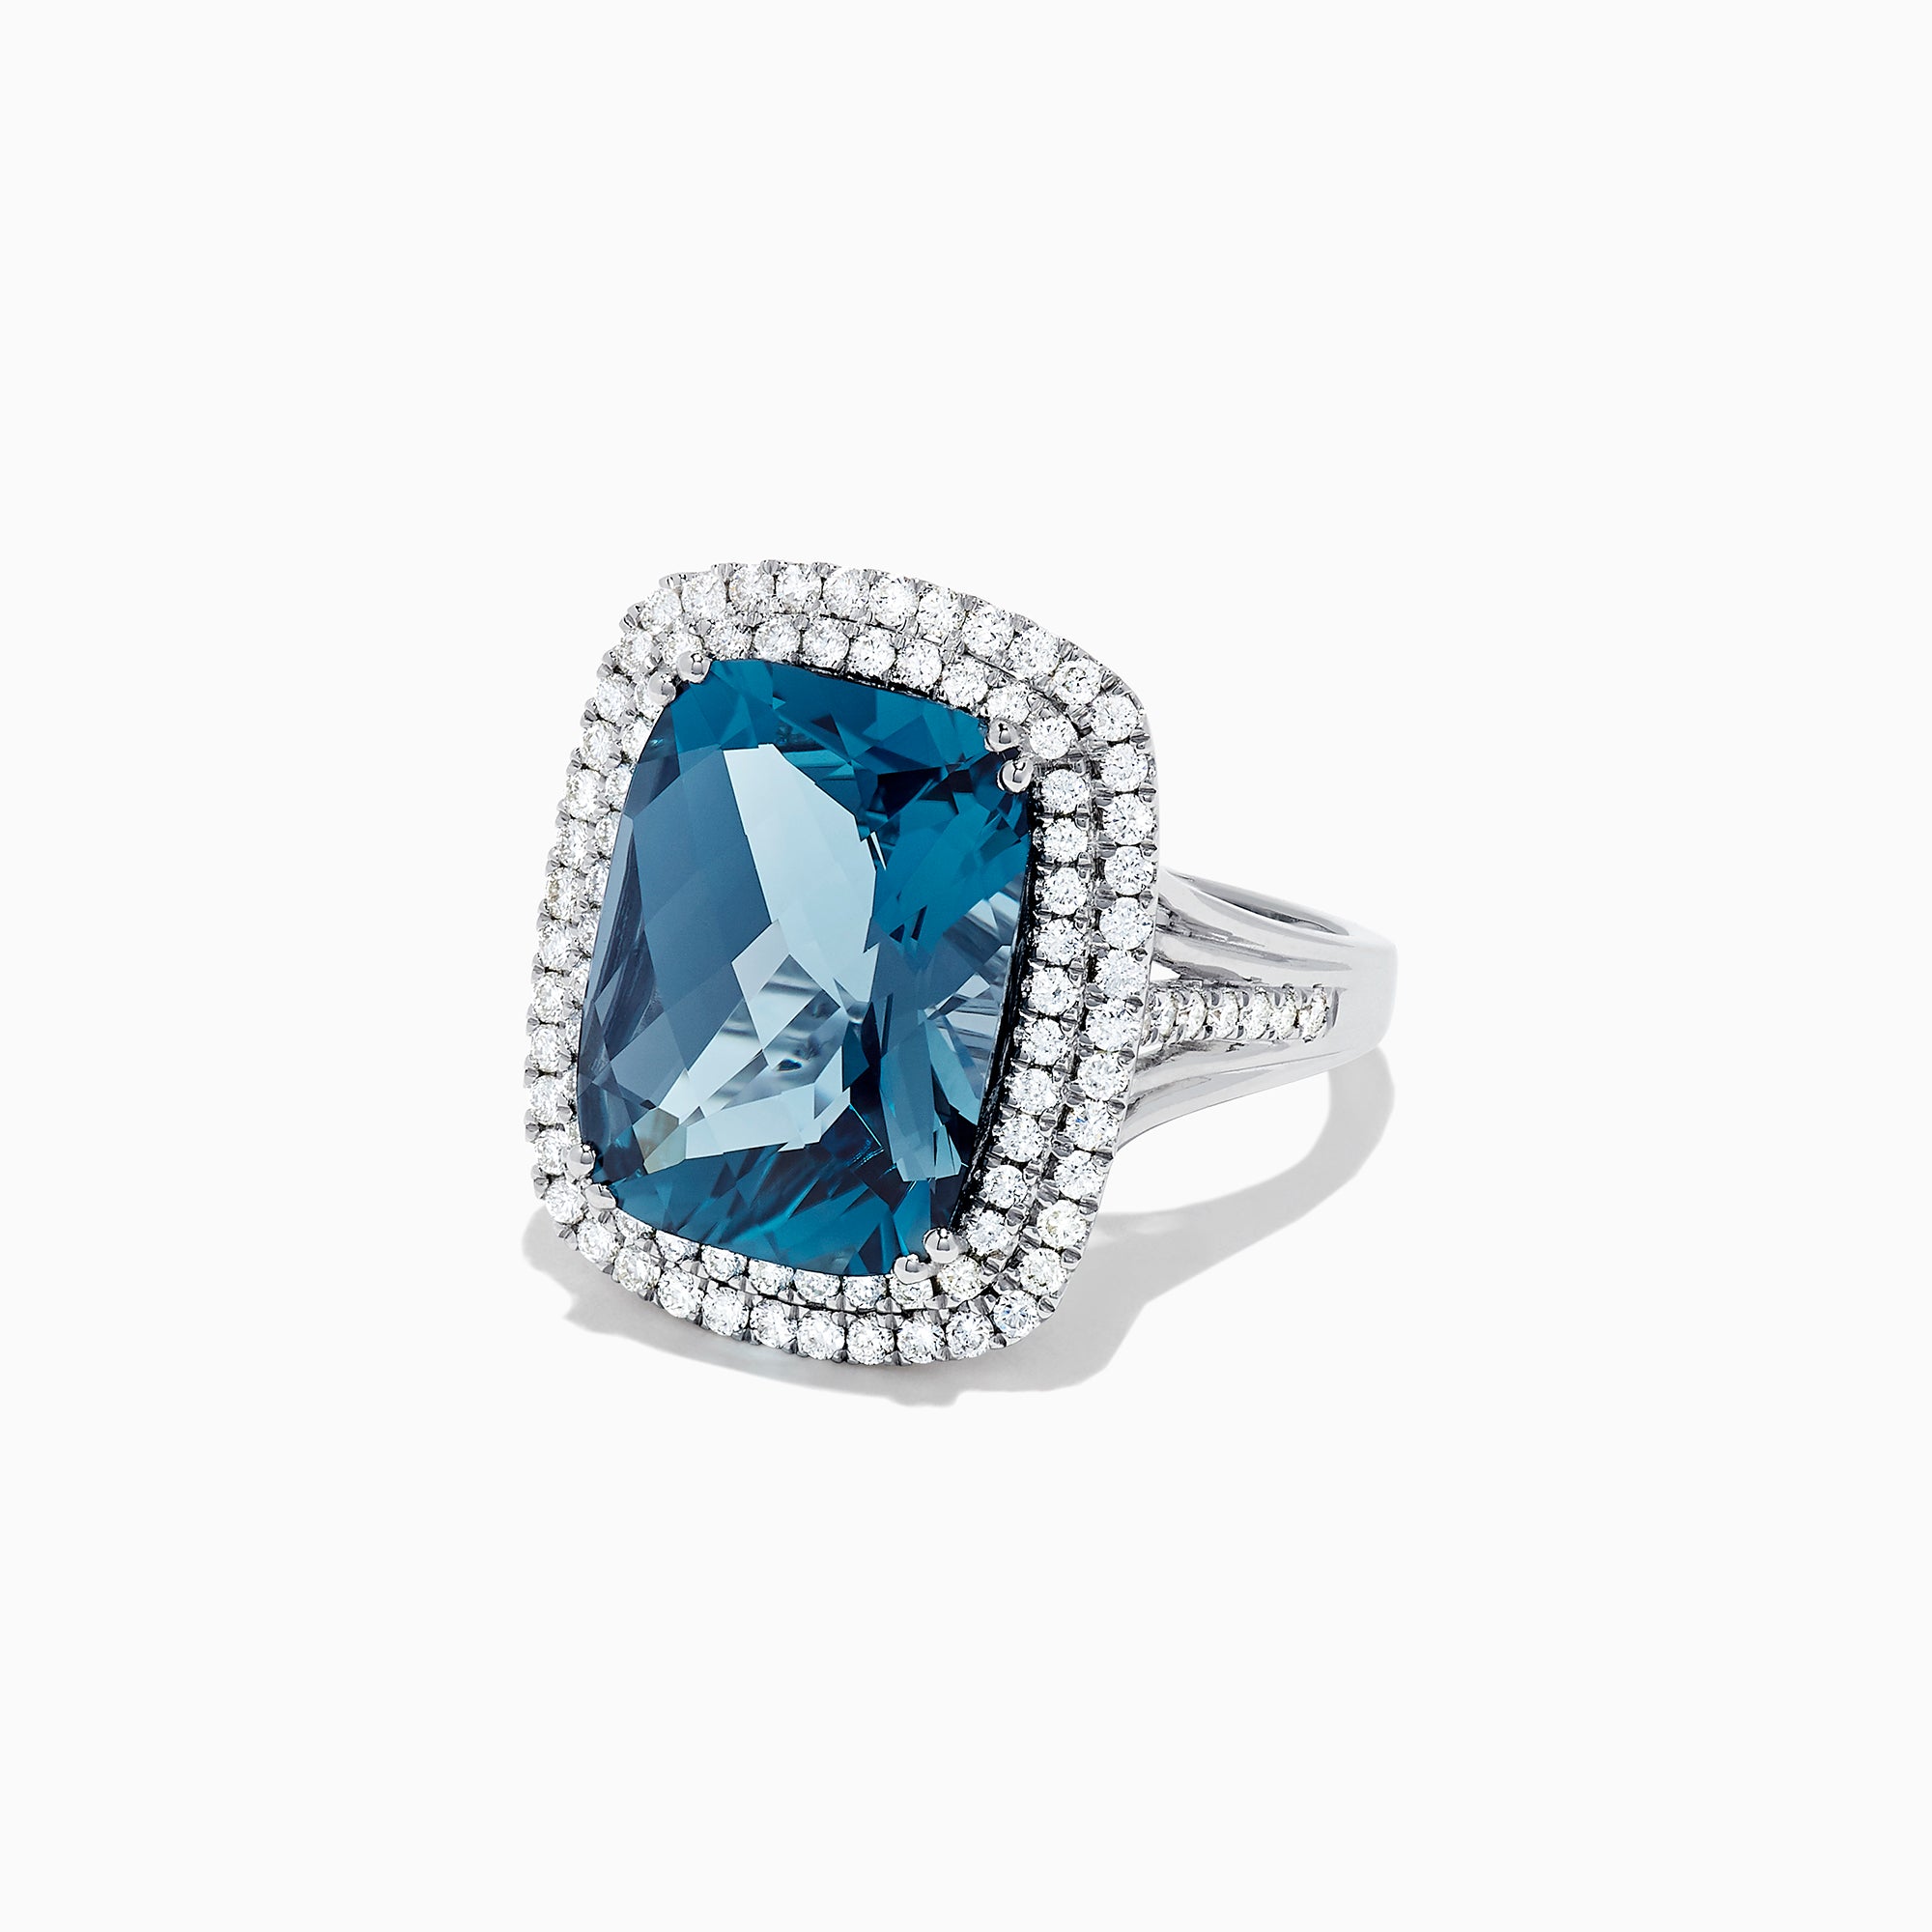 Effy Ocean Bleu 14K White Gold London Blue Topaz and Diamond Ring, 12.32 TCW